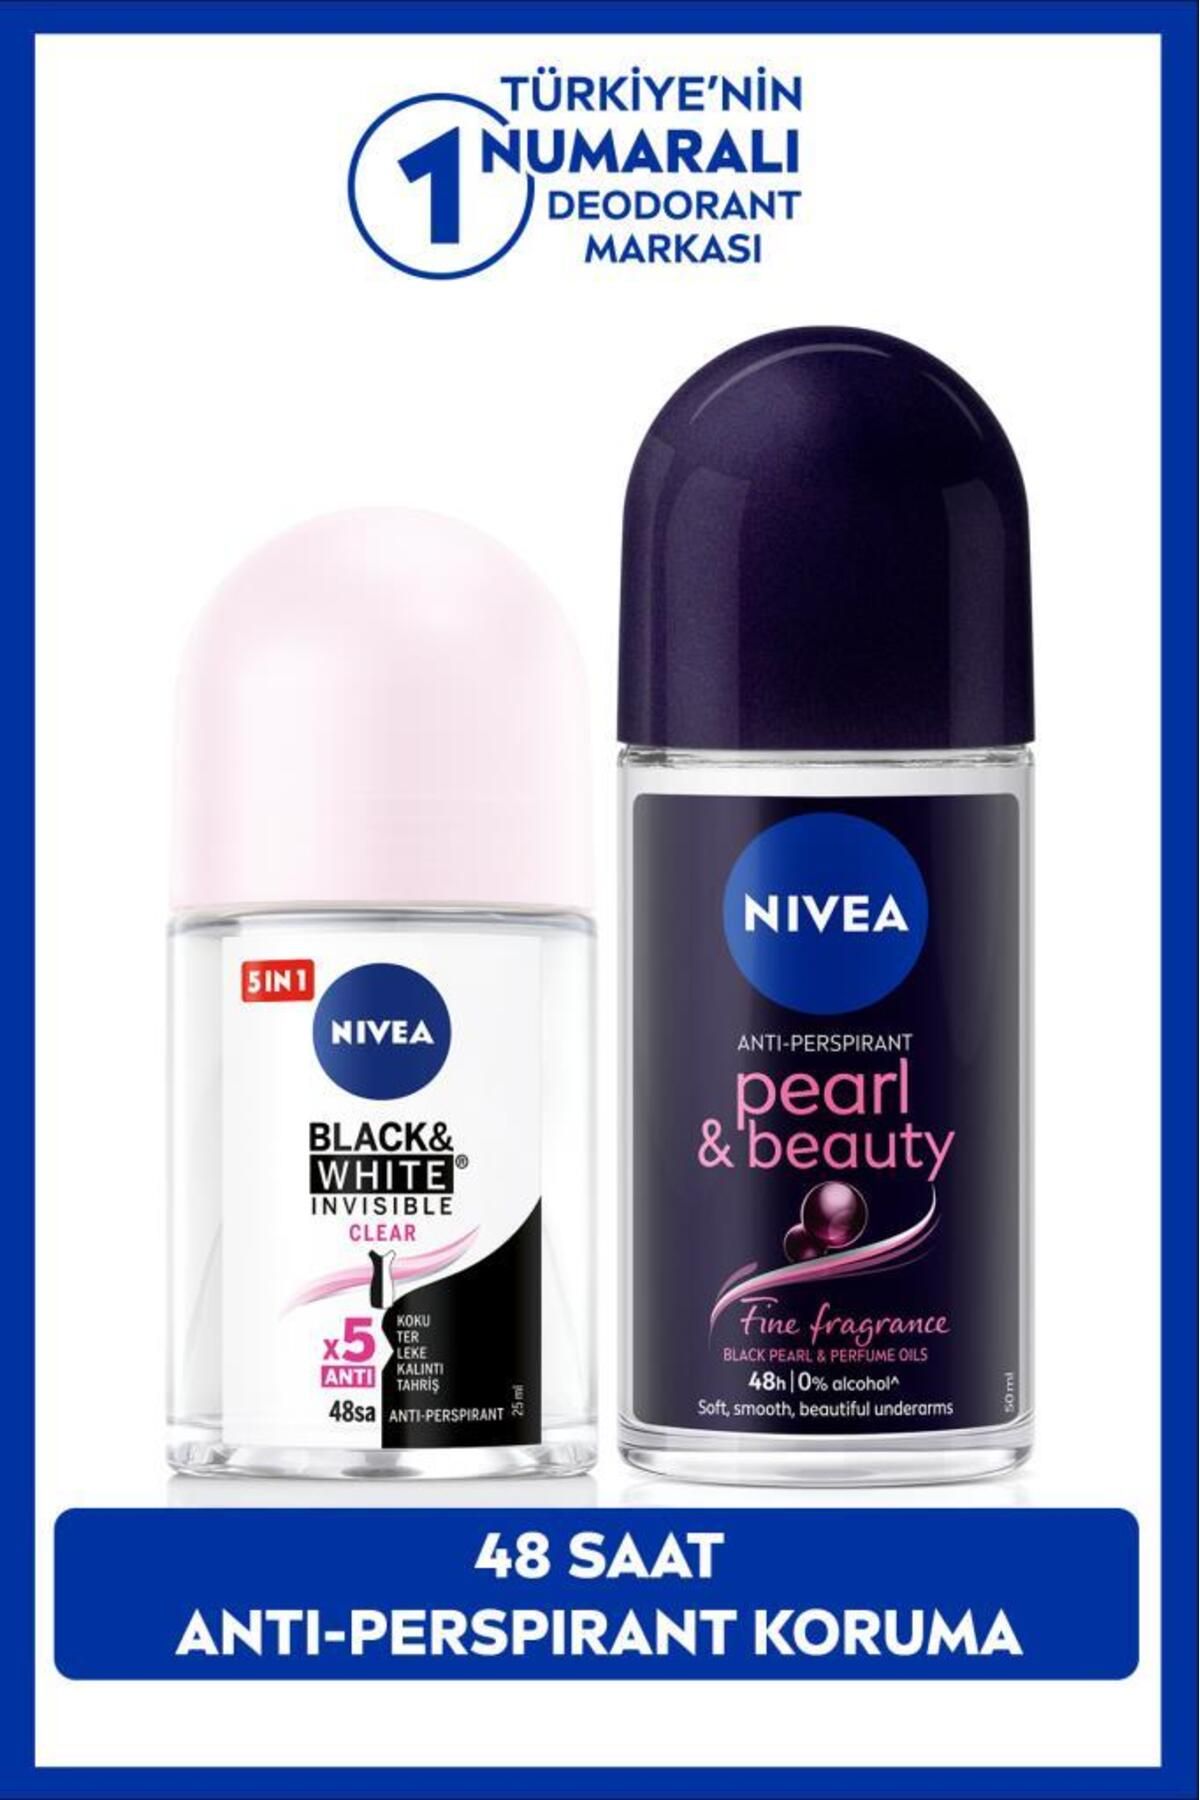 NIVEA KADIN Roll-on Deodorant Pearl&Beauty 50ml ve Mini Roll-on Black&White 25ml, Bakımlı Koltuk Altı